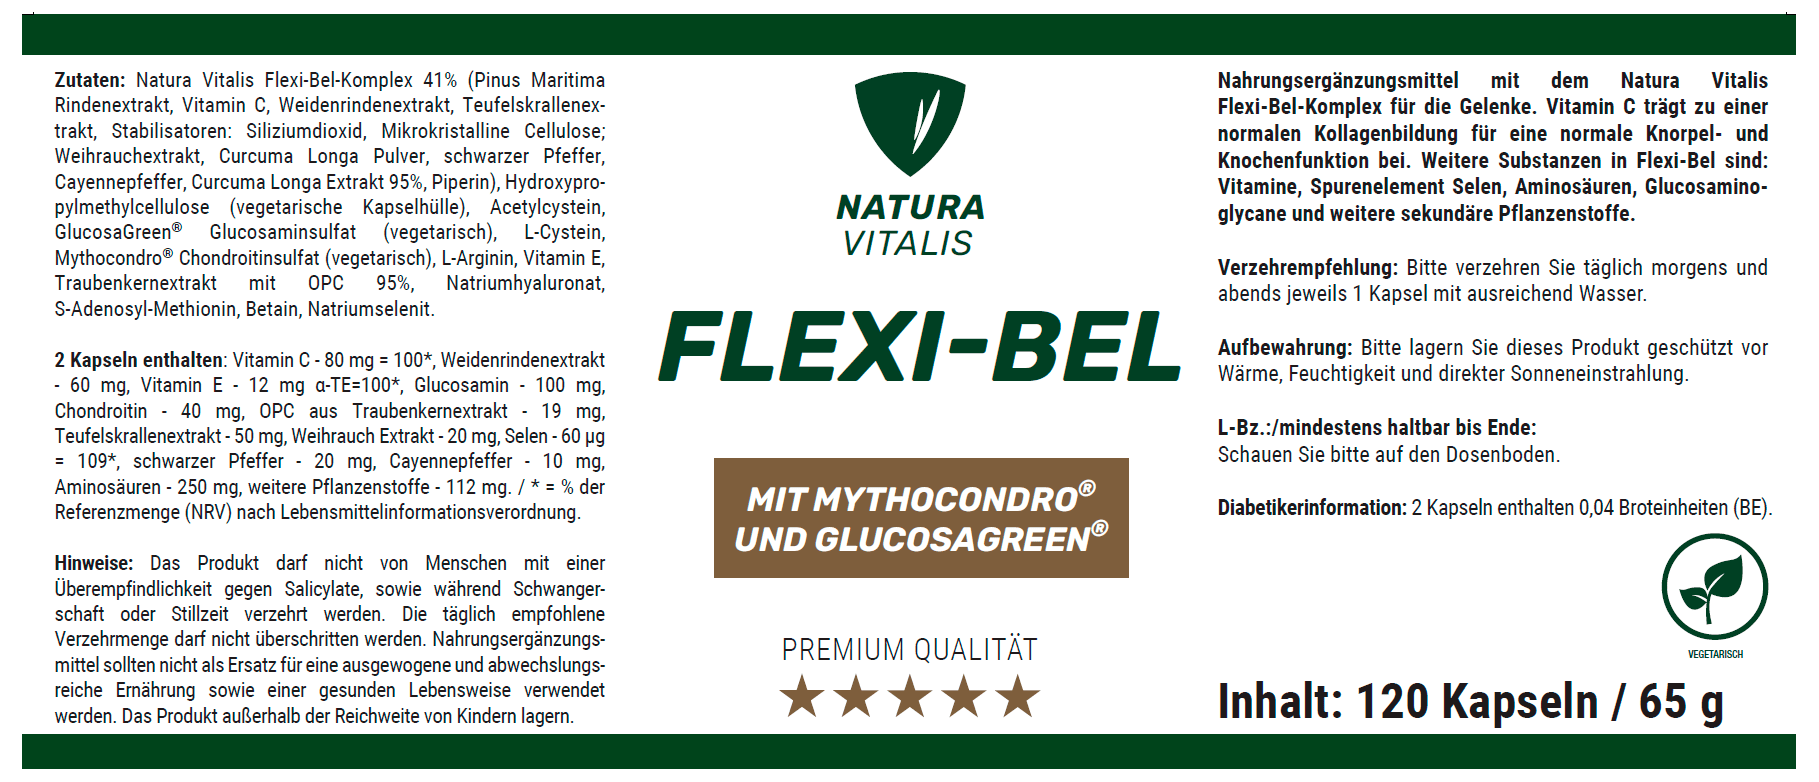 Flexi-Bel 360 Kapseln von Natura Vitalis